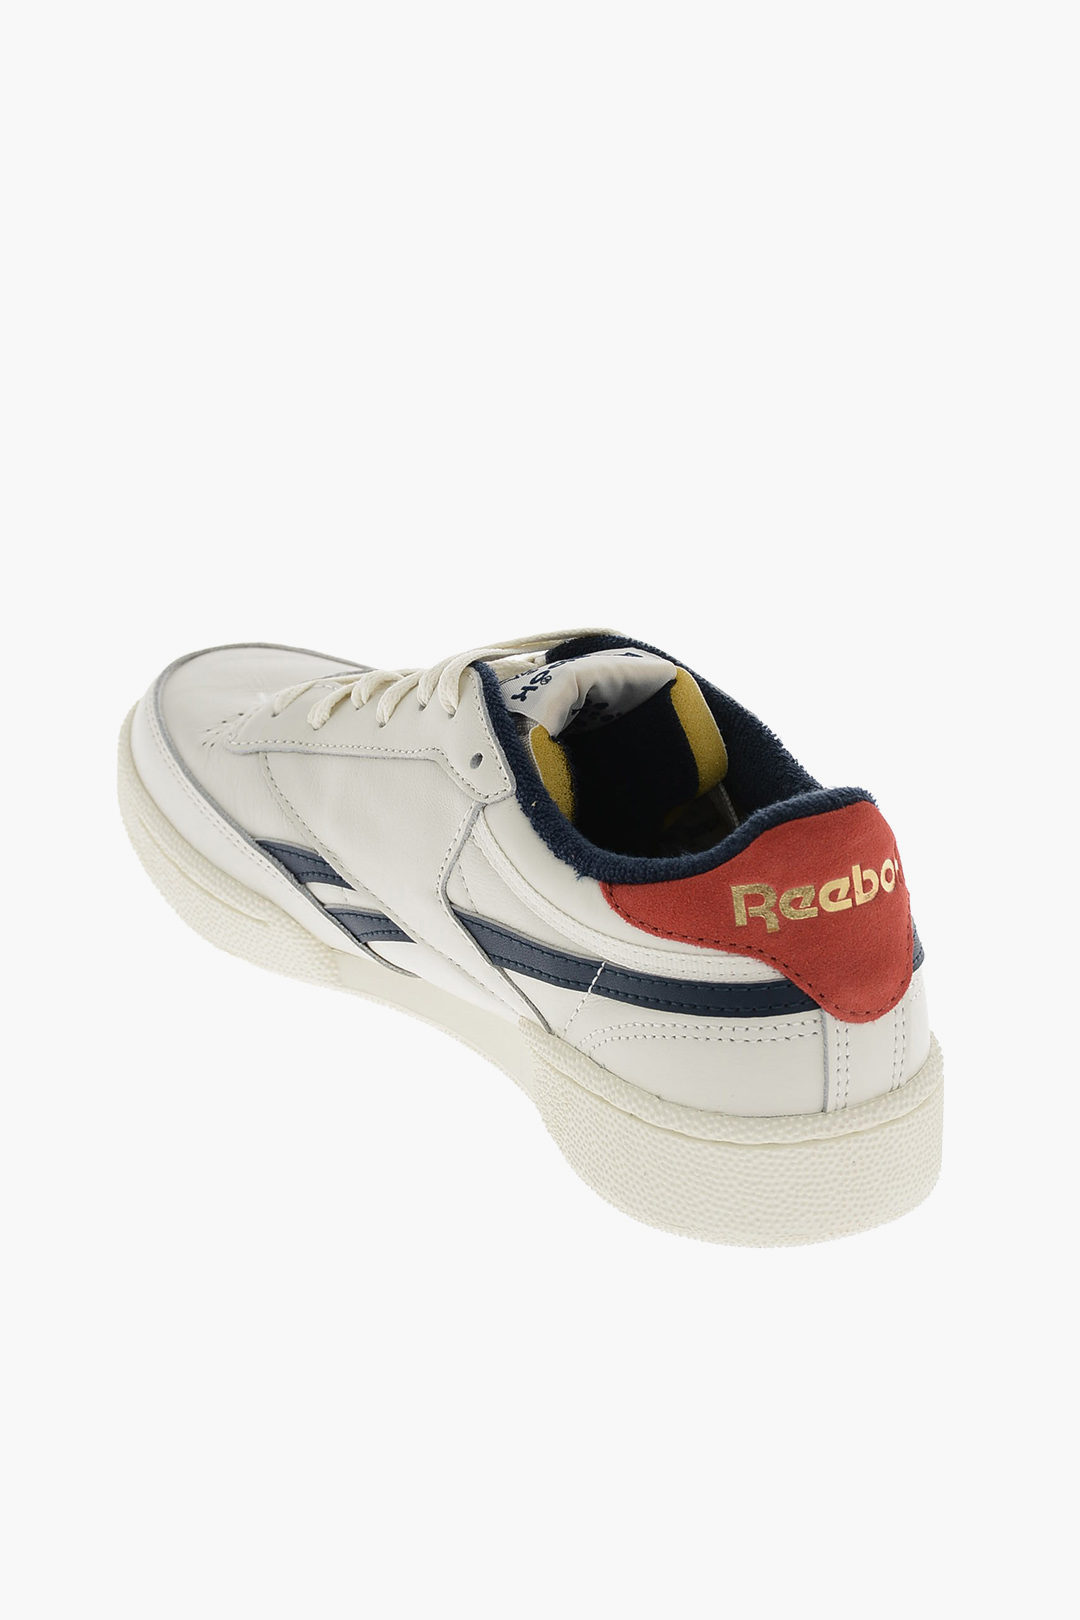 Reebok Daytona DMX MU 'Humble Blue' Black/Humble Blue/Scarlet Marathon  Running Shoes/Sneakers FV8241